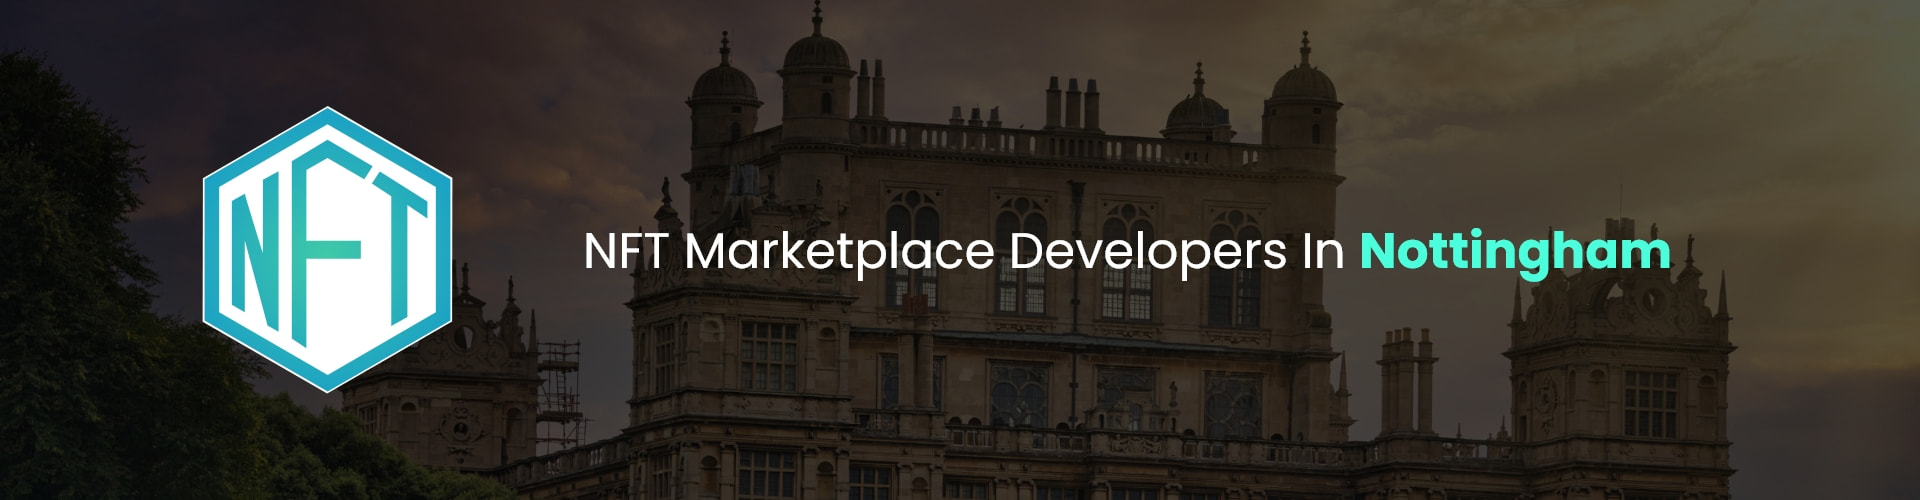 hire nft marketplace developers in nottingham